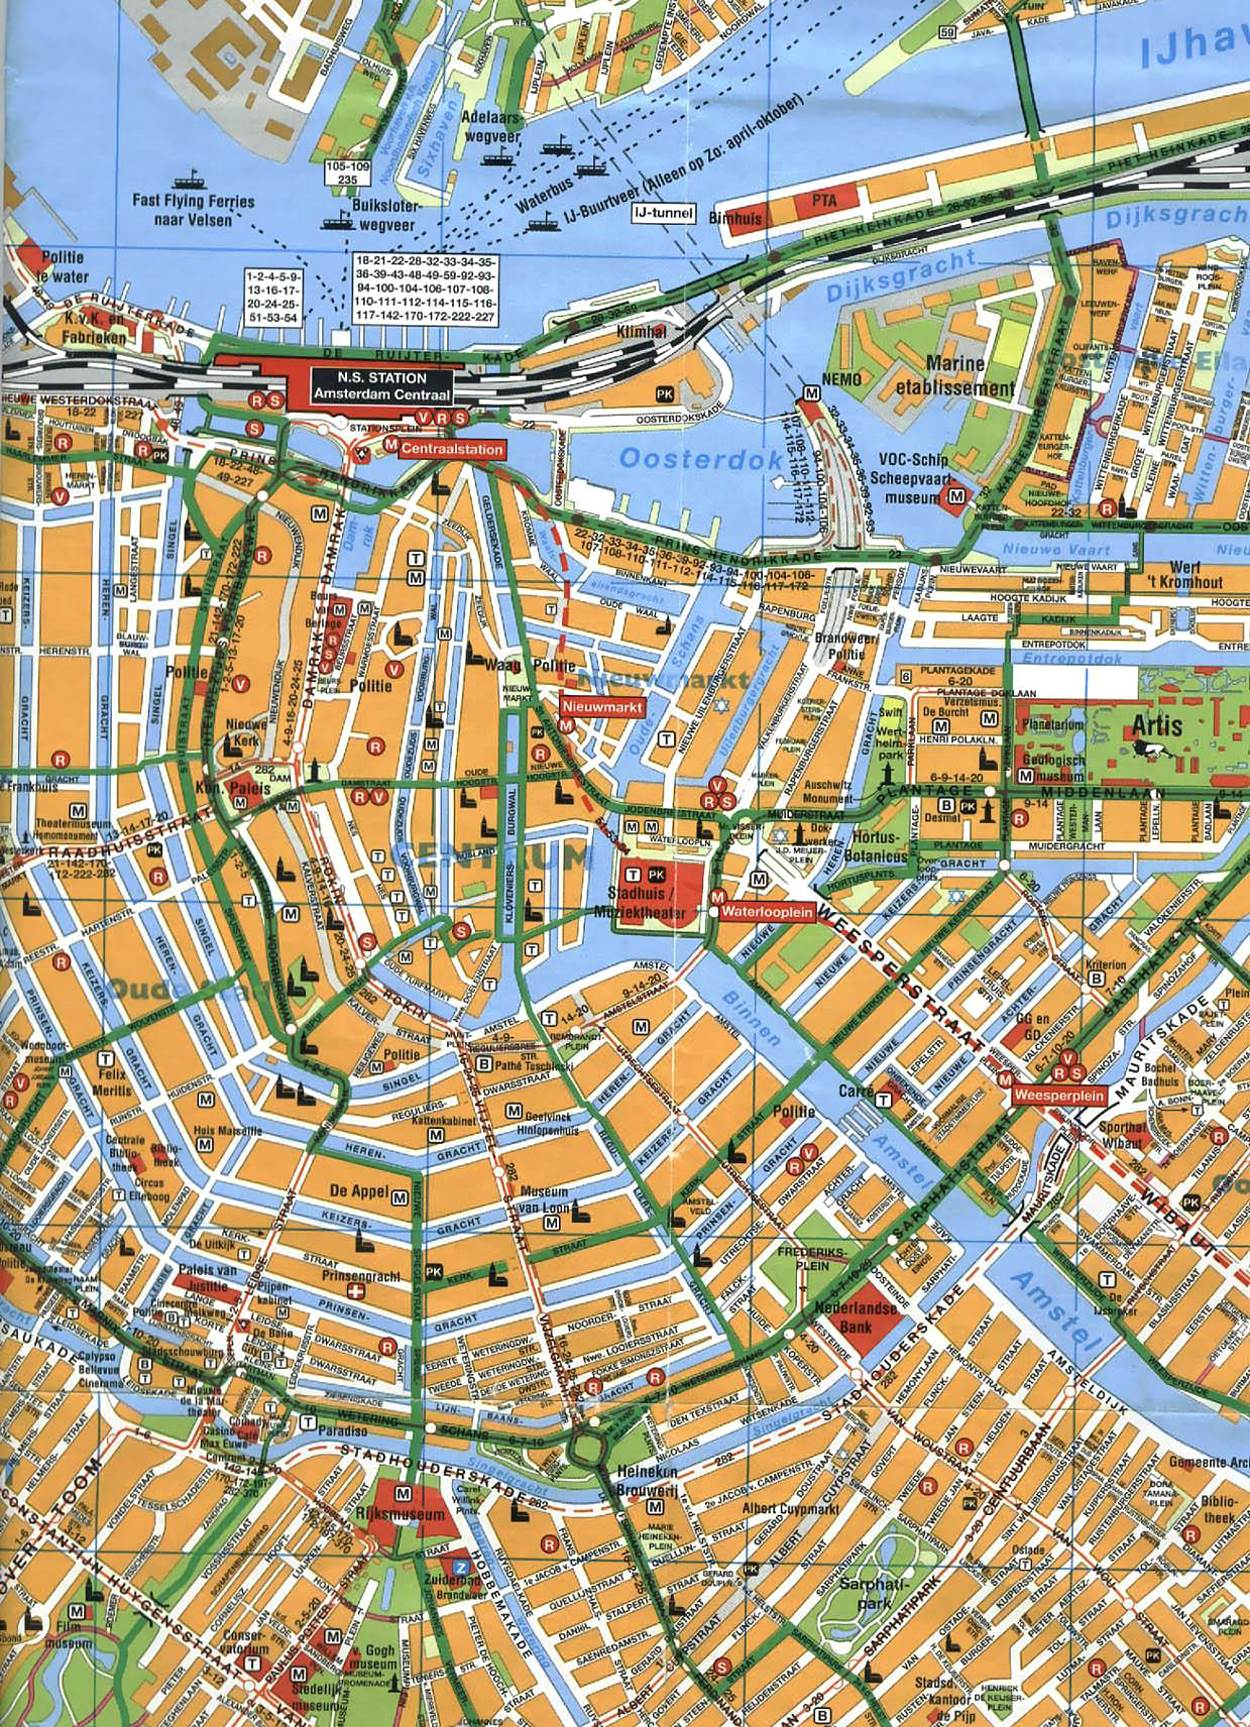 Map of Amsterdam city center